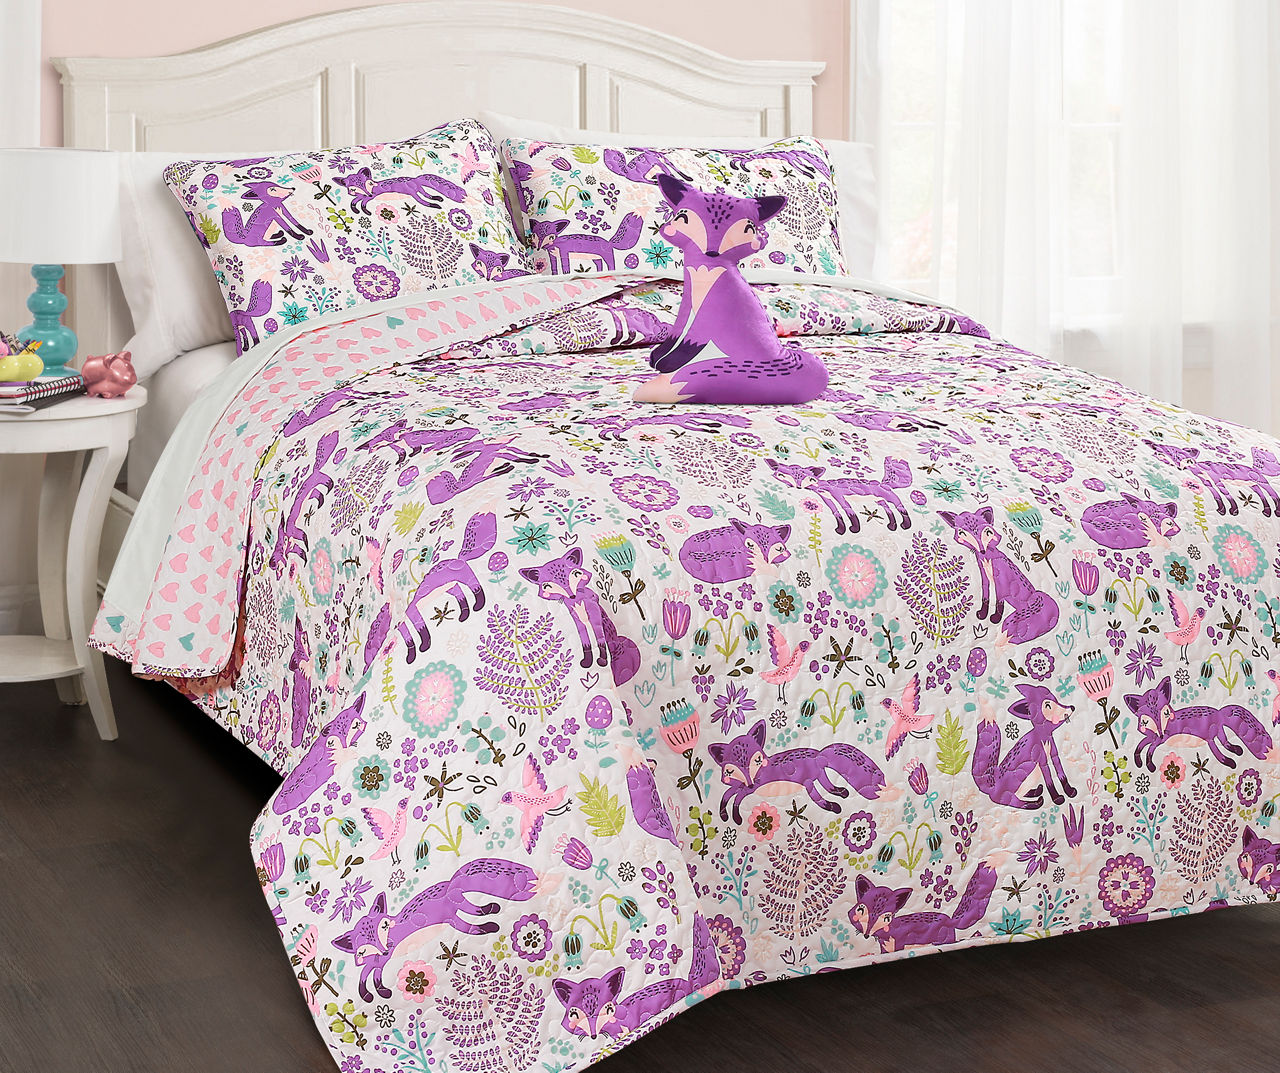 Pixie Fox White & Purple Floral Full/Queen 4-Piece Quilt Set